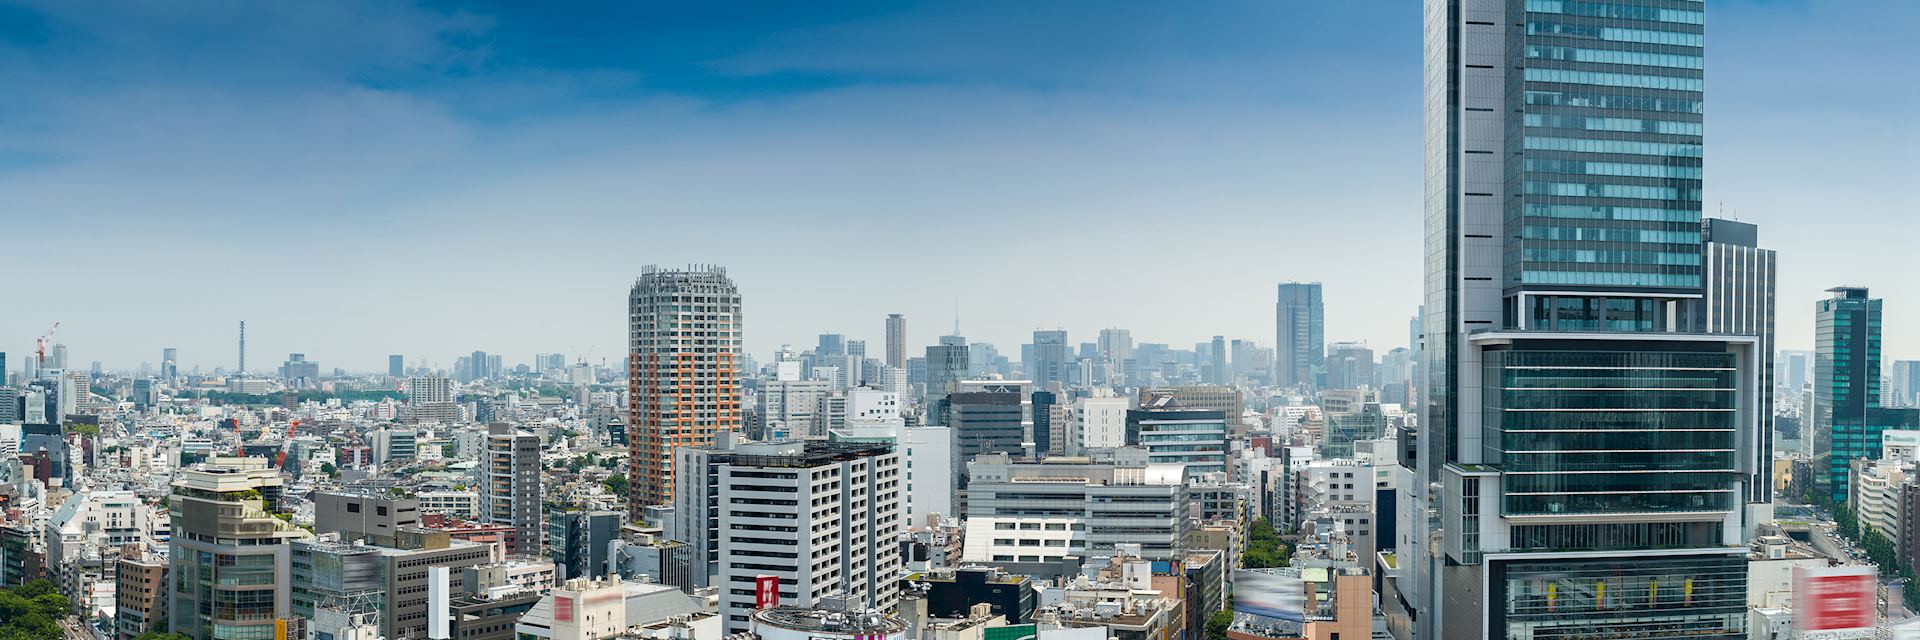 Tokyo skyline from Shibuya Sky